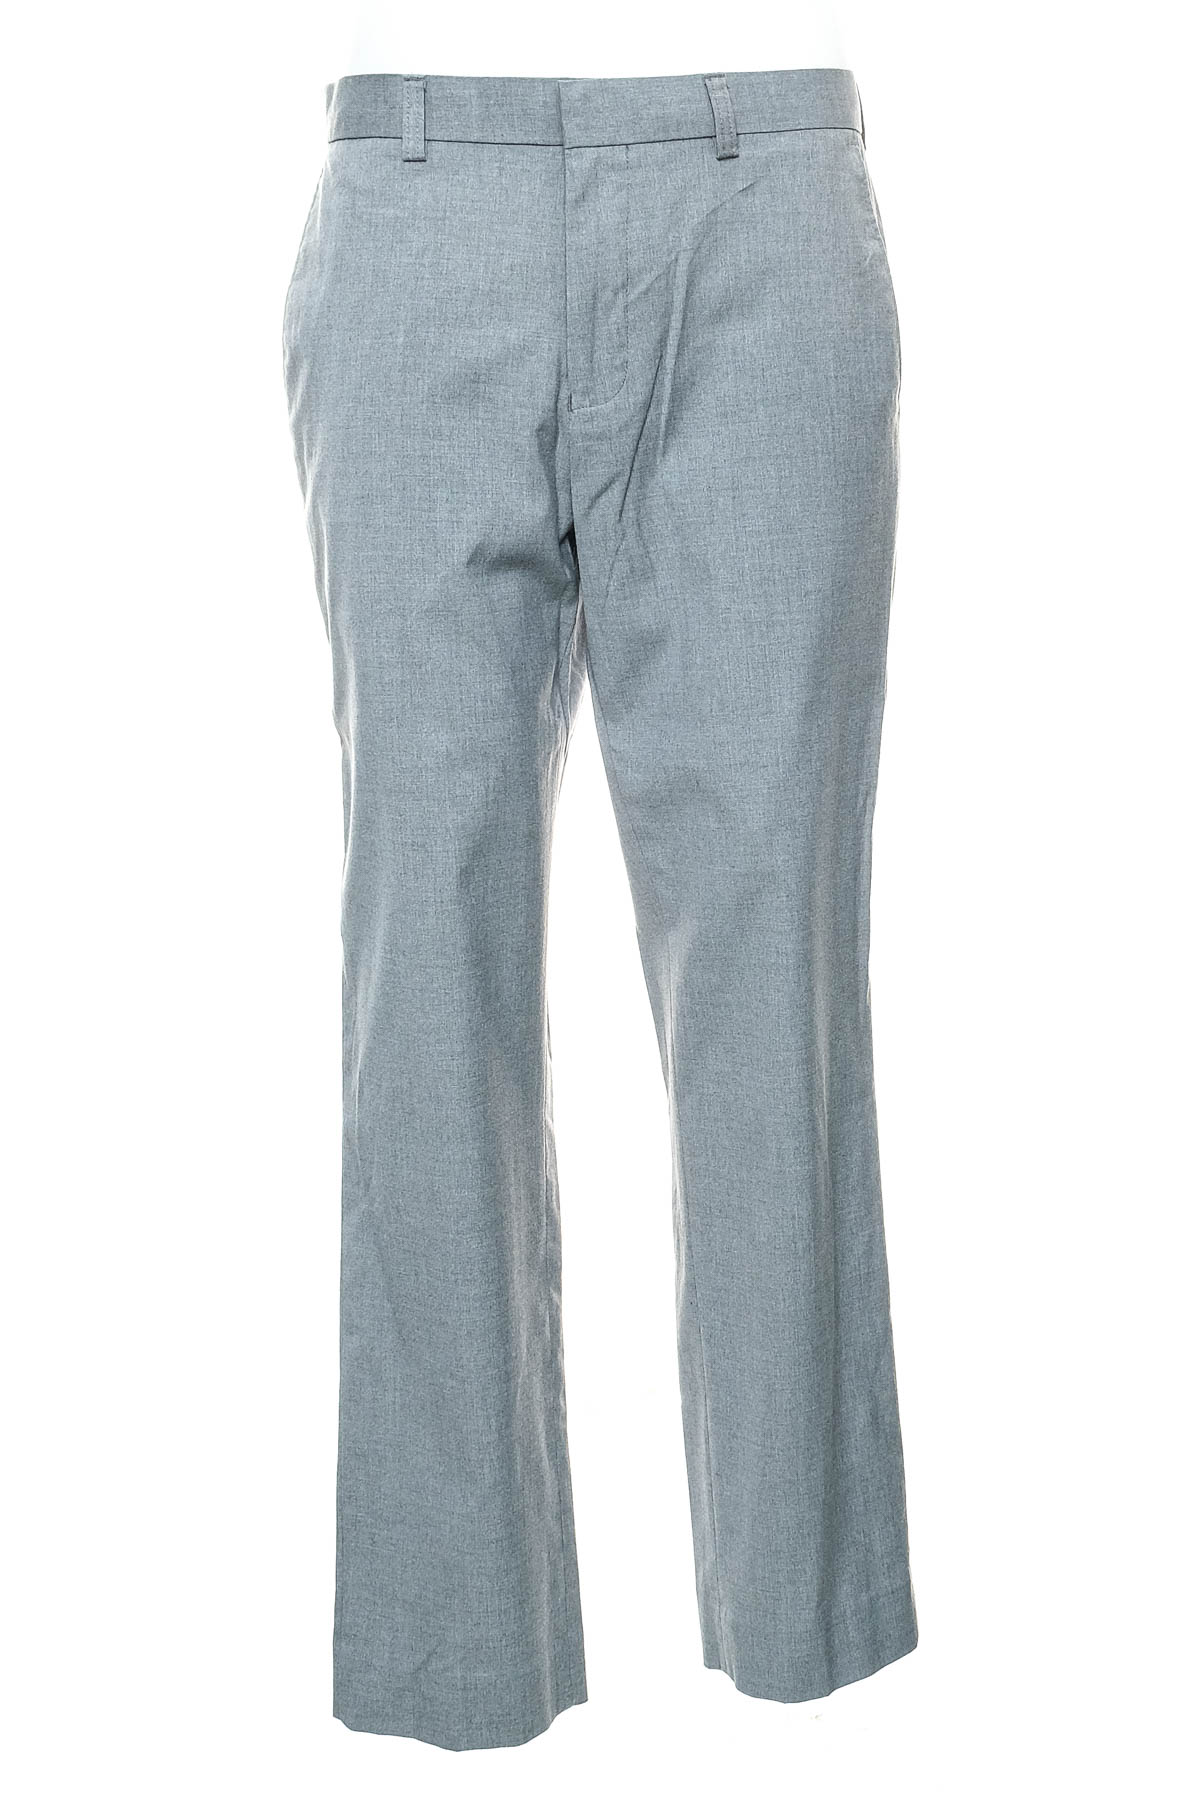 Pantalon pentru bărbați - BURTON - 0